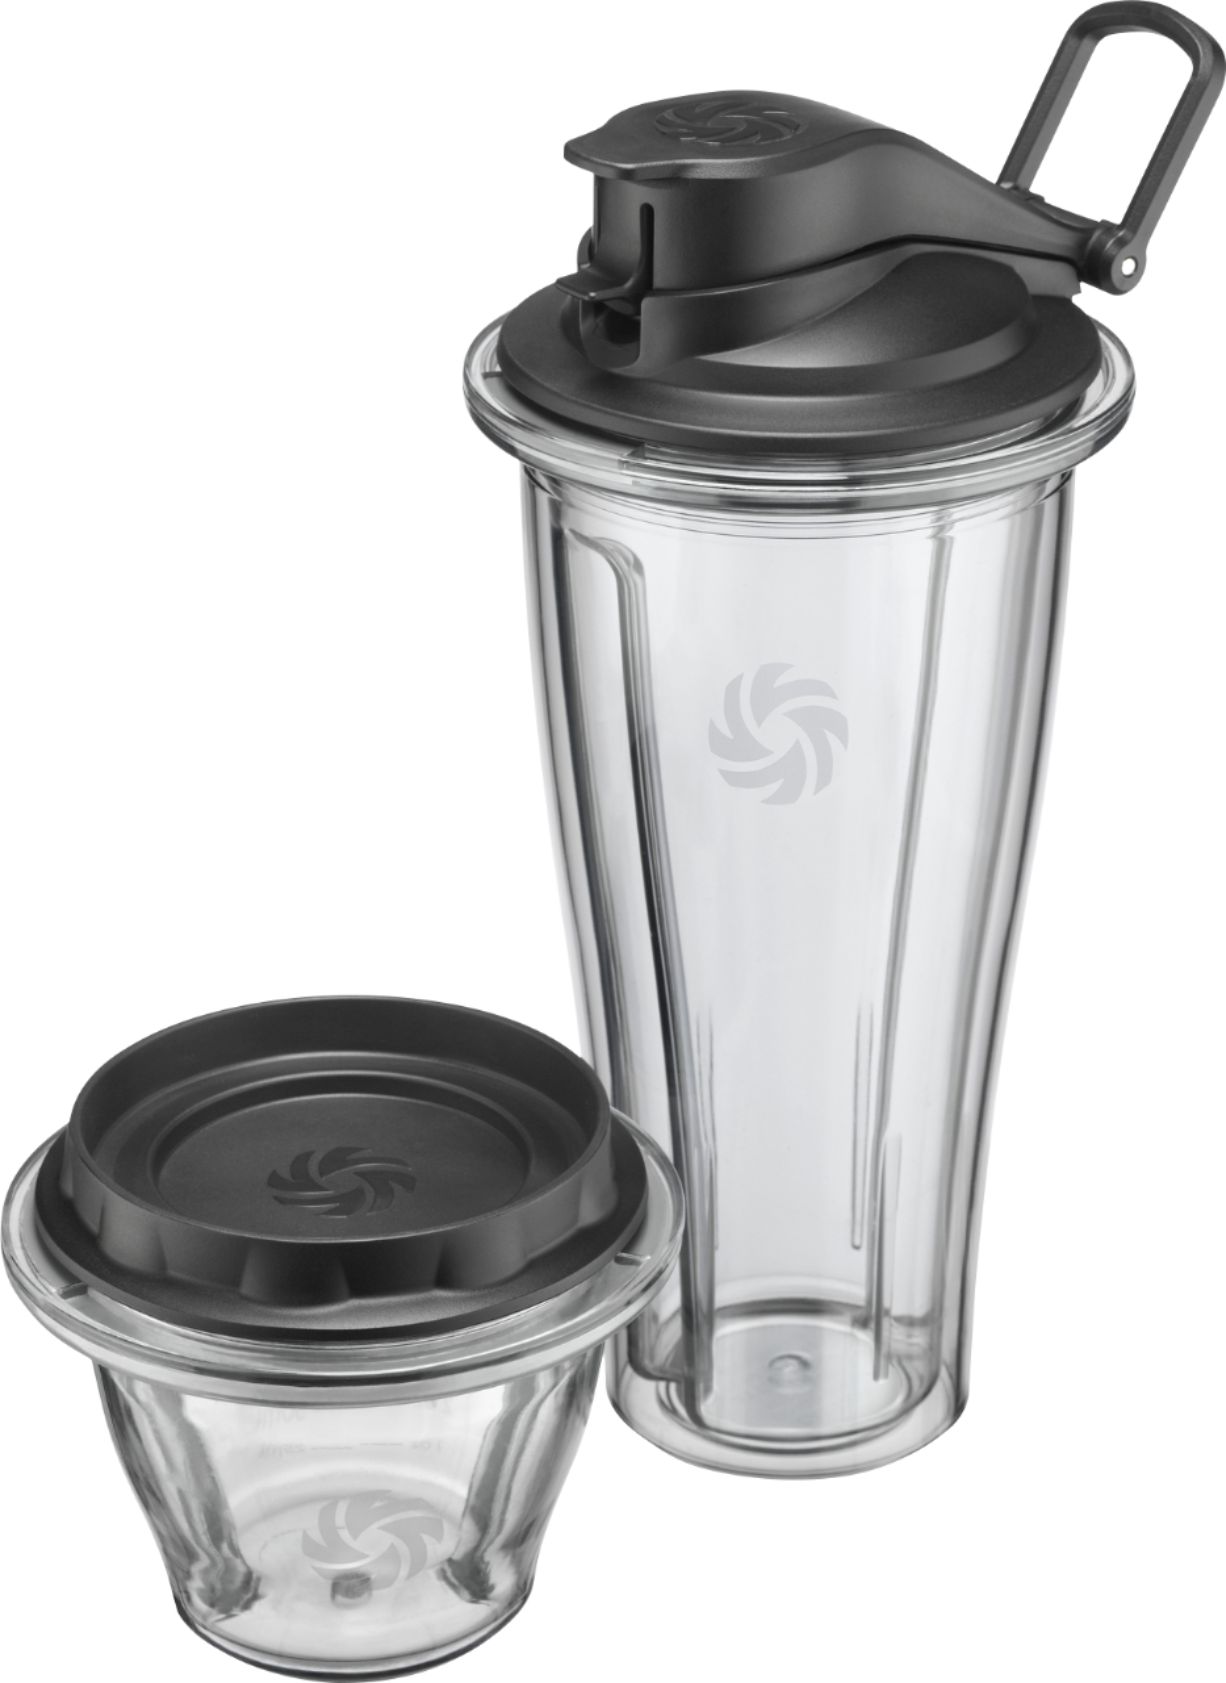 Left View: Vitamix - Blending Cup Starter Kit for Ascent Series Blenders - Black/Clear